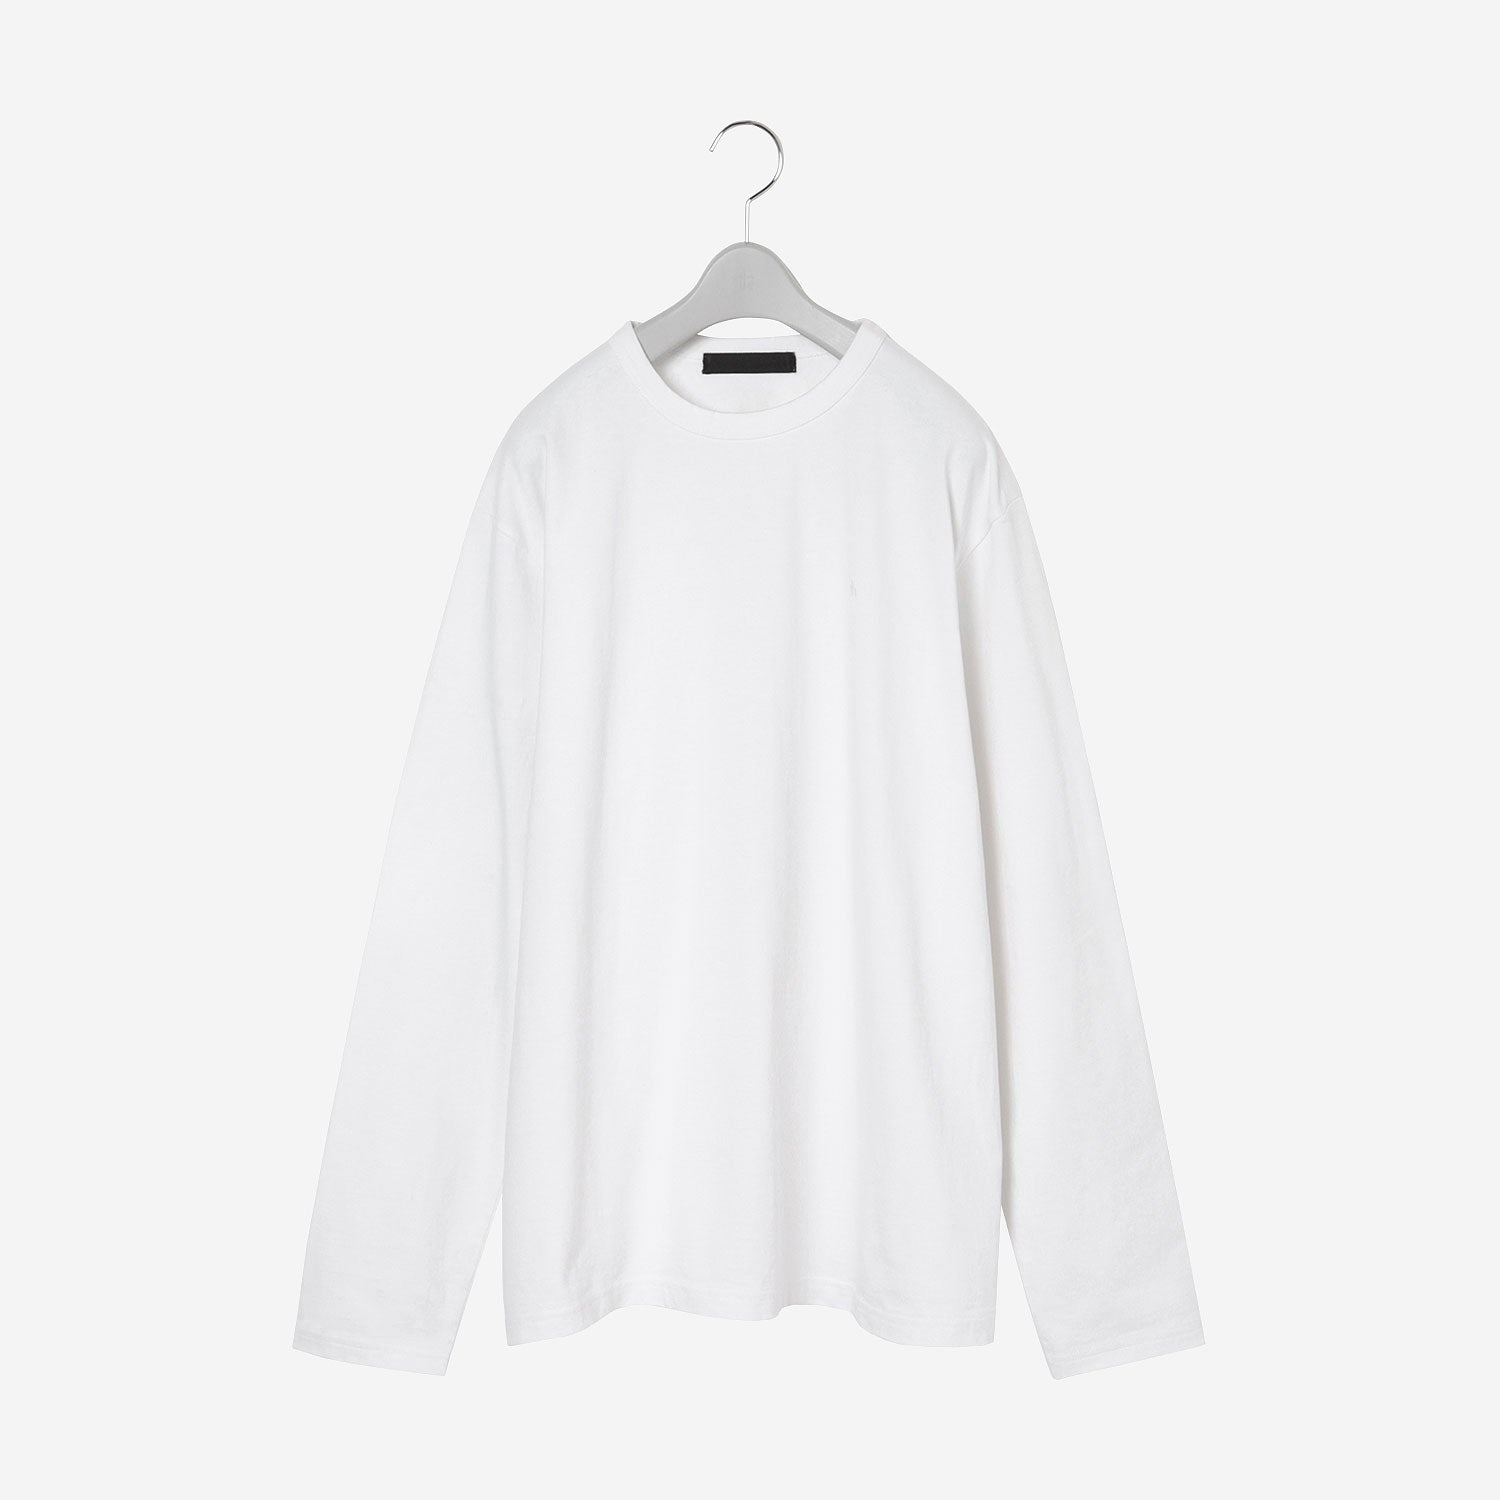 Tec Long Sleeve T-Shirt / white